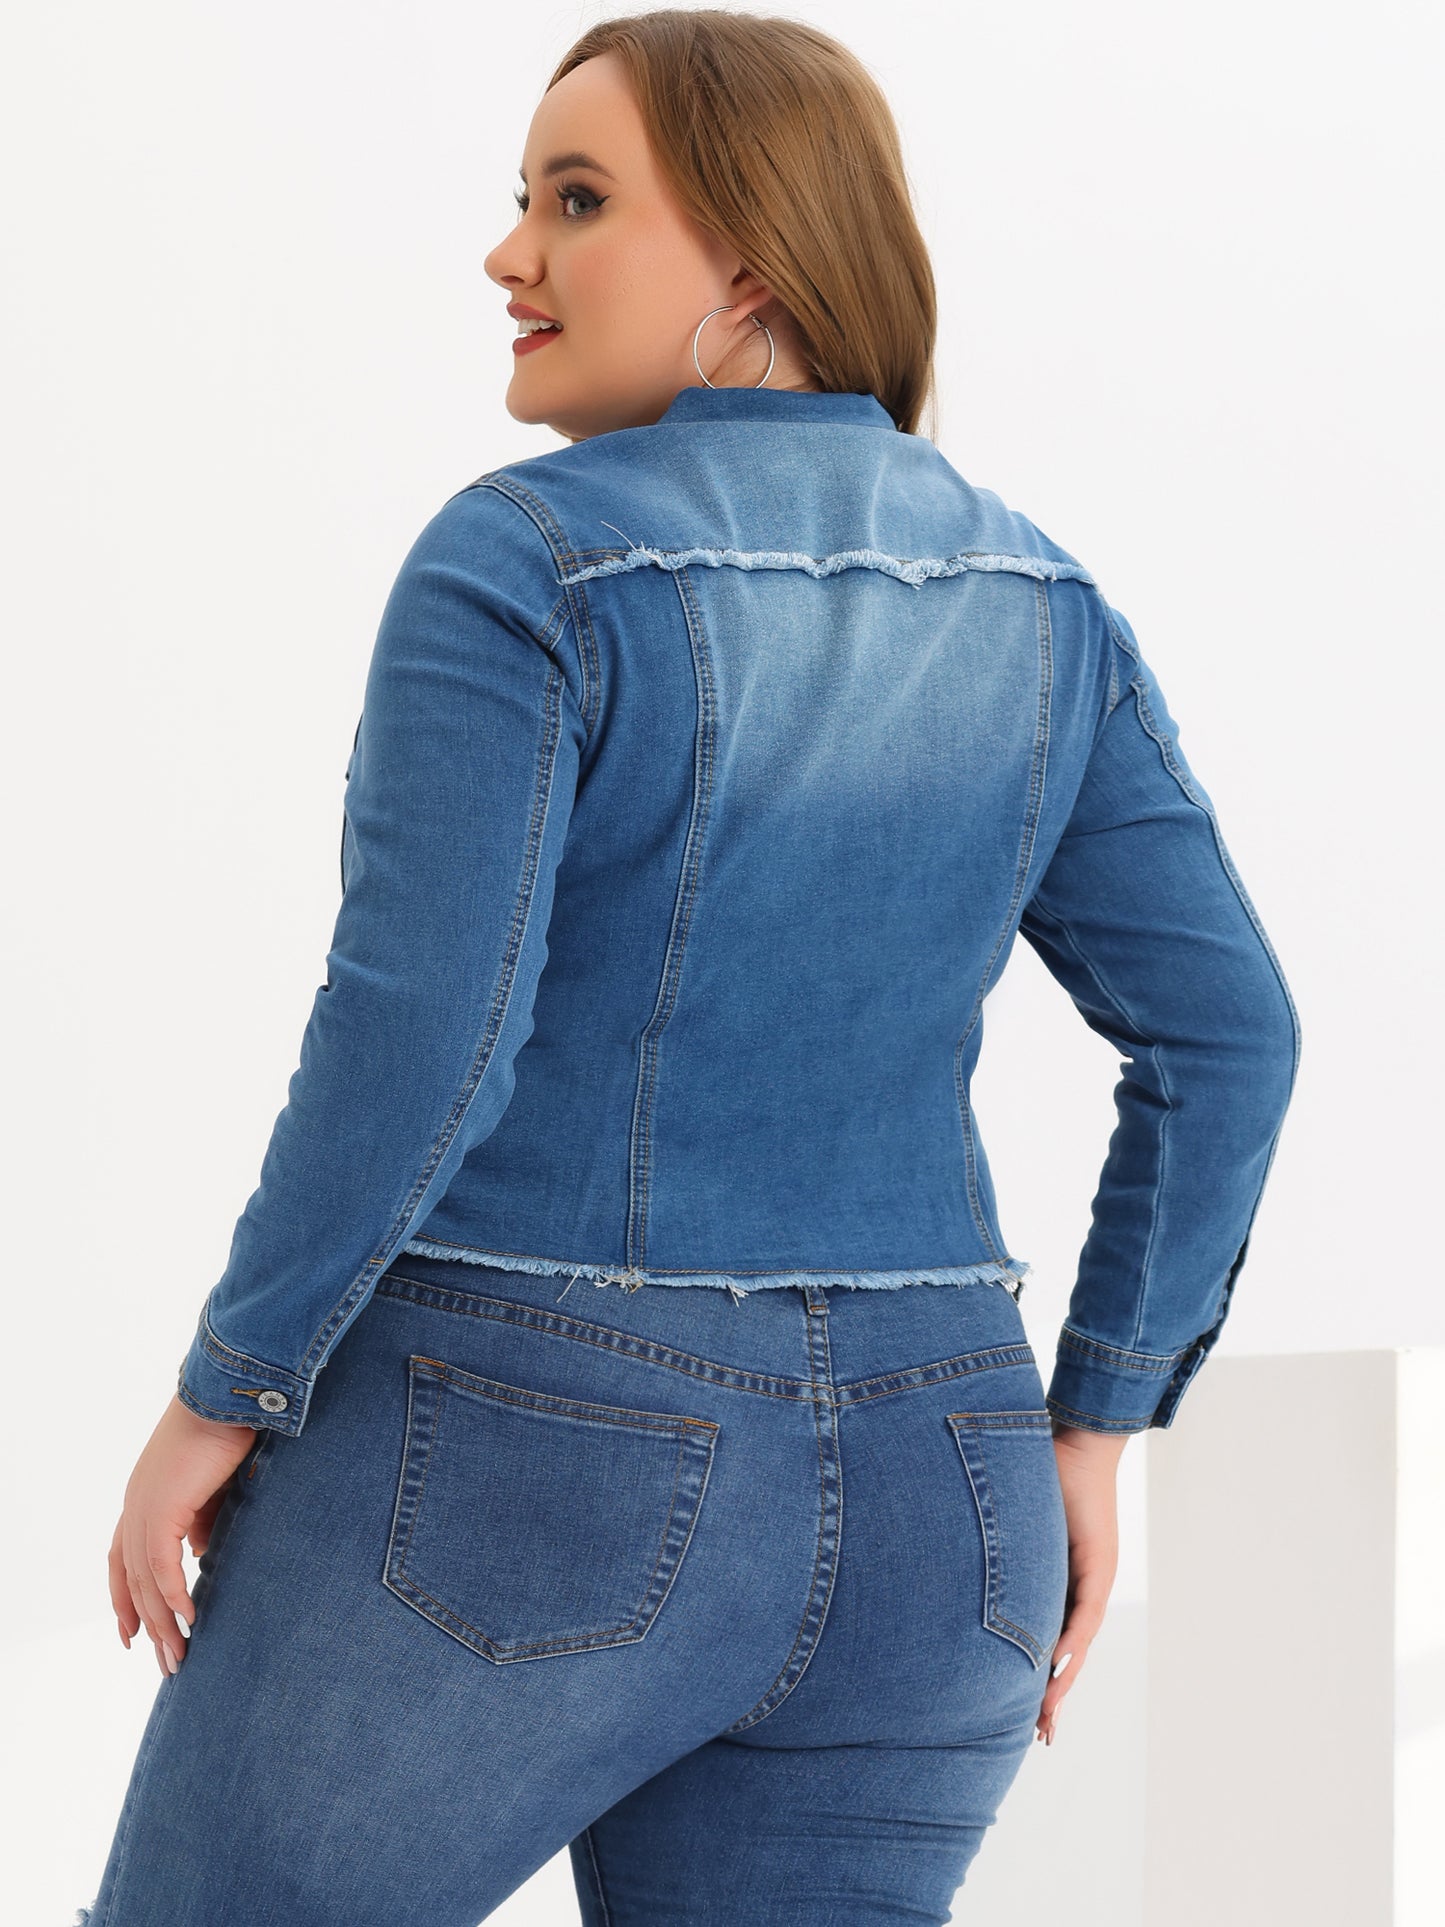 Agnes Orinda Plus Size Classic Washed Front Frayed Denim Jacket Blue Ripped